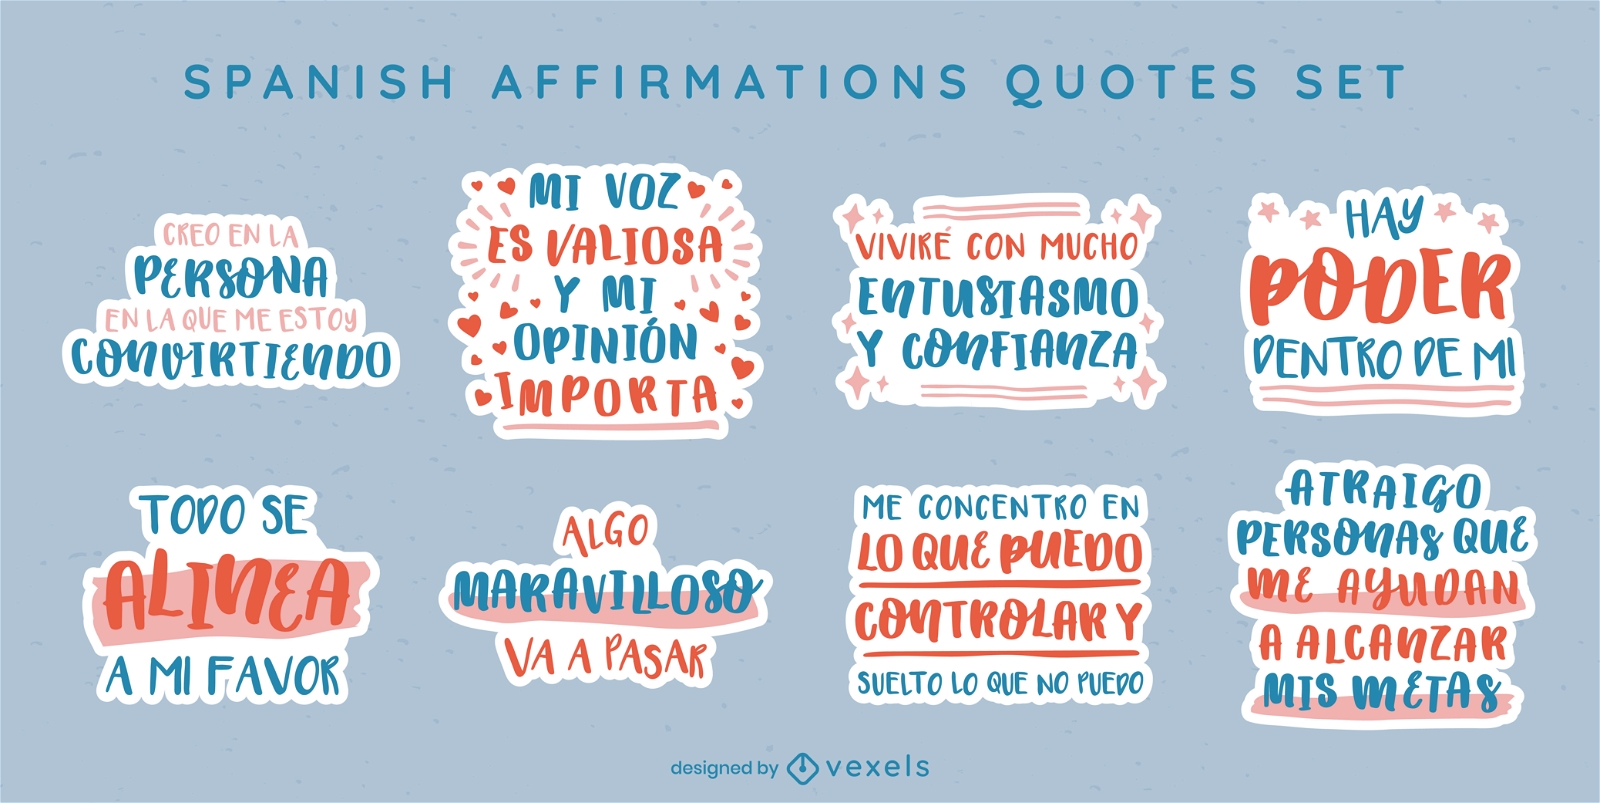 Spanish affirmation quotes set